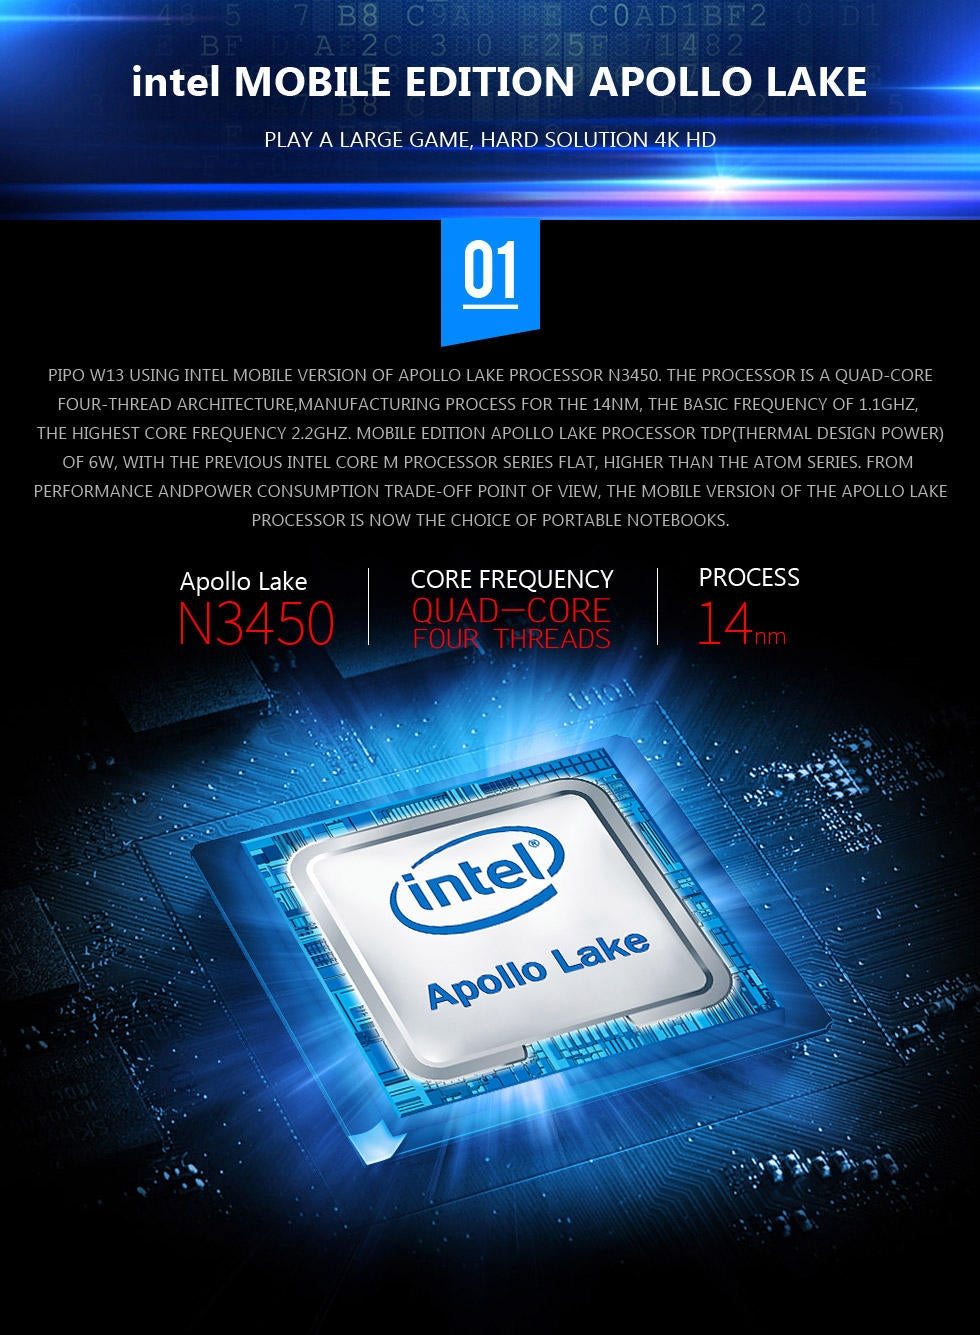 PiPO W13 Intel Apollo Lake N3450 4GB 64GB 13.3 inch Notebook Windows 10 1920*1080 HDMI